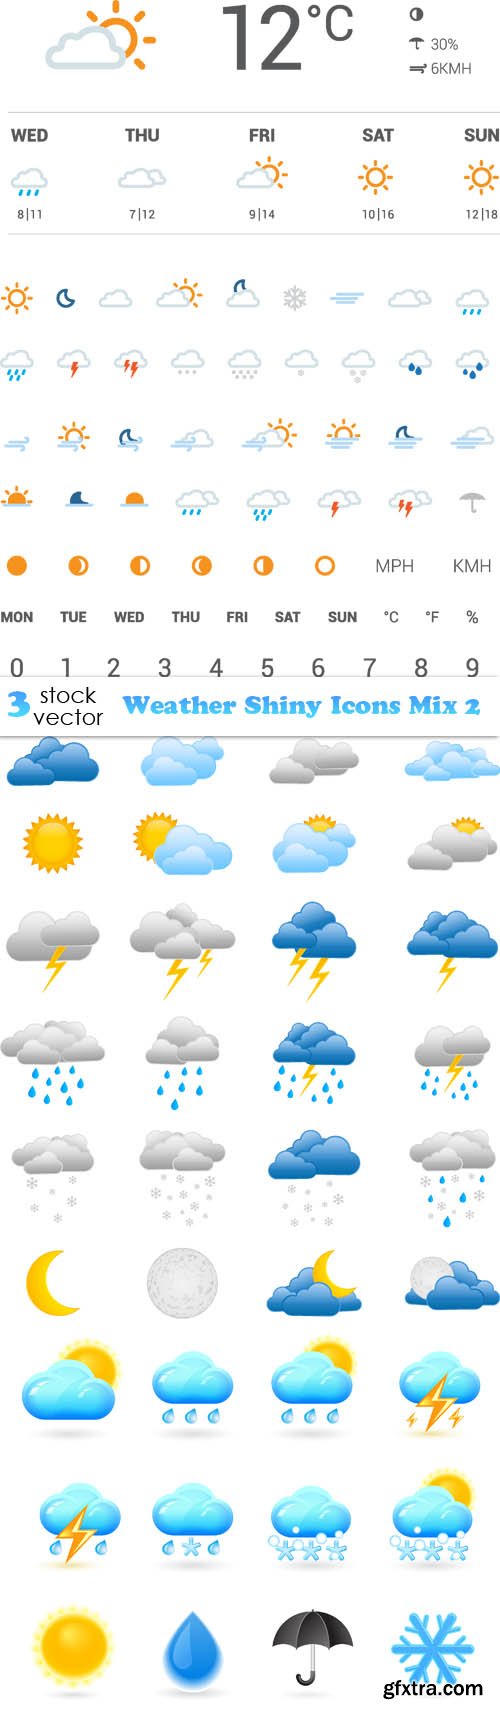 Vectors - Weather Shiny Icons Mix 2